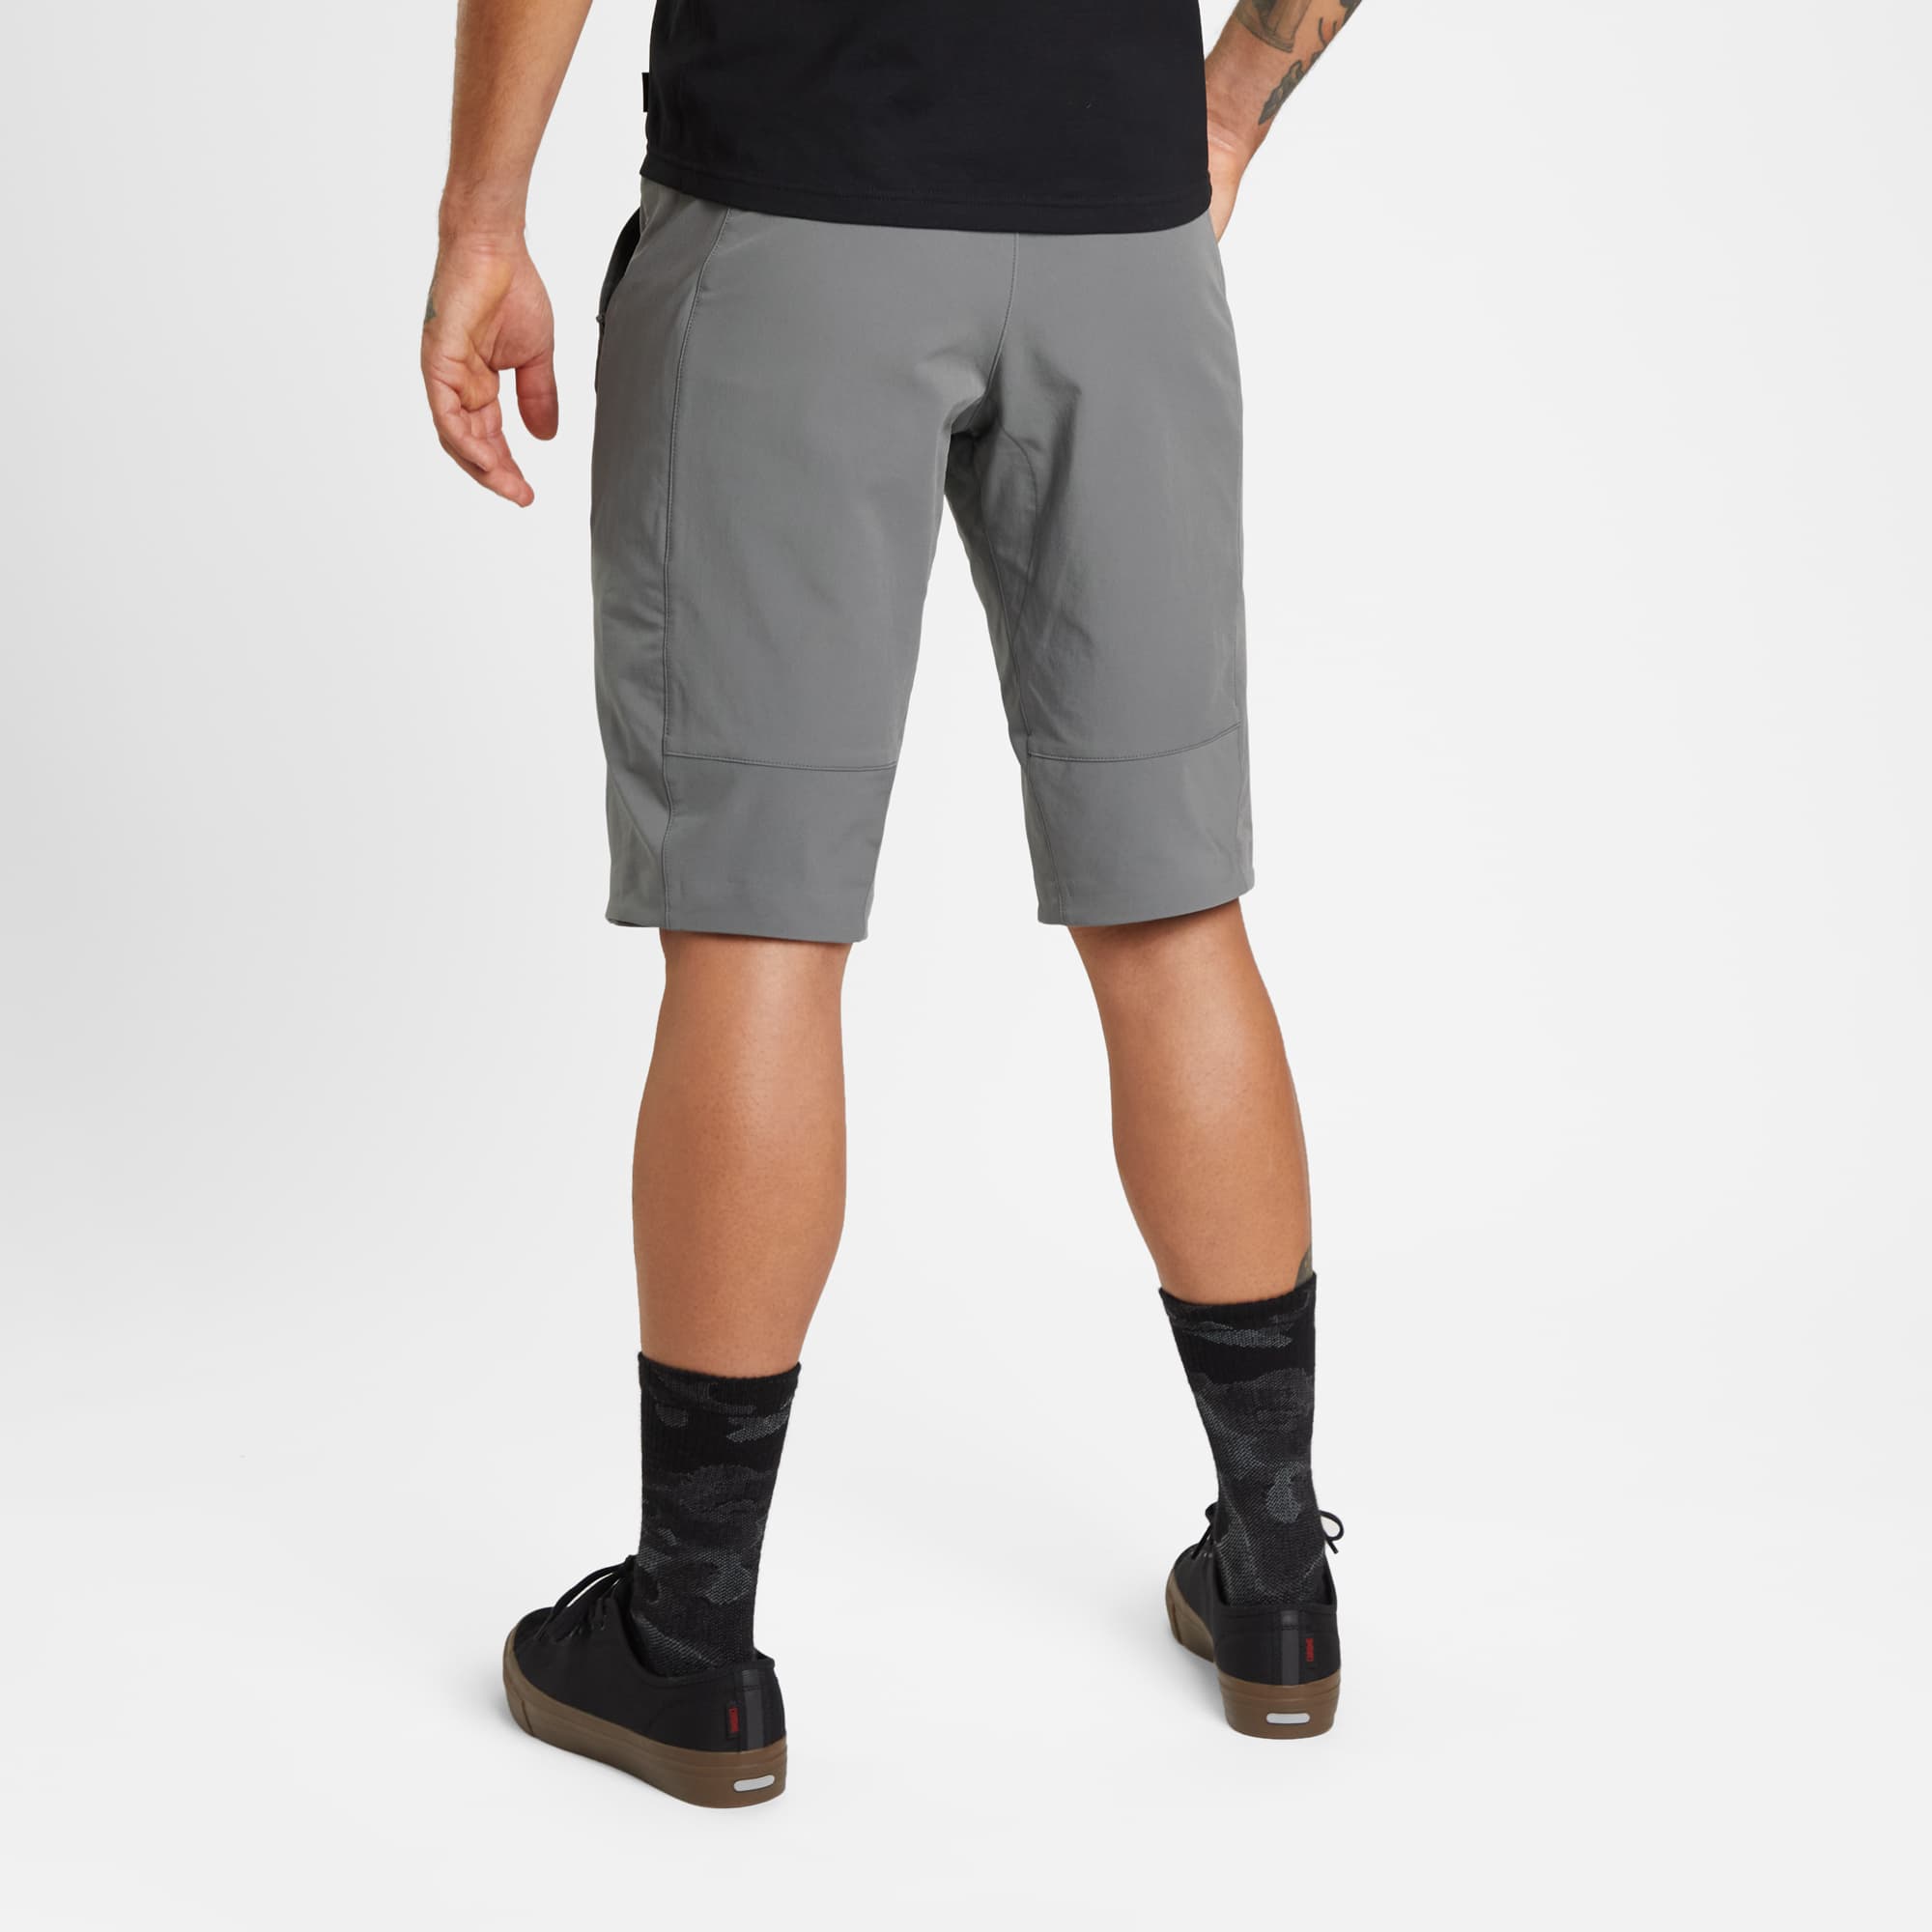 Men's tech Sutro Short in grey worn by a man back view #color_castle rock